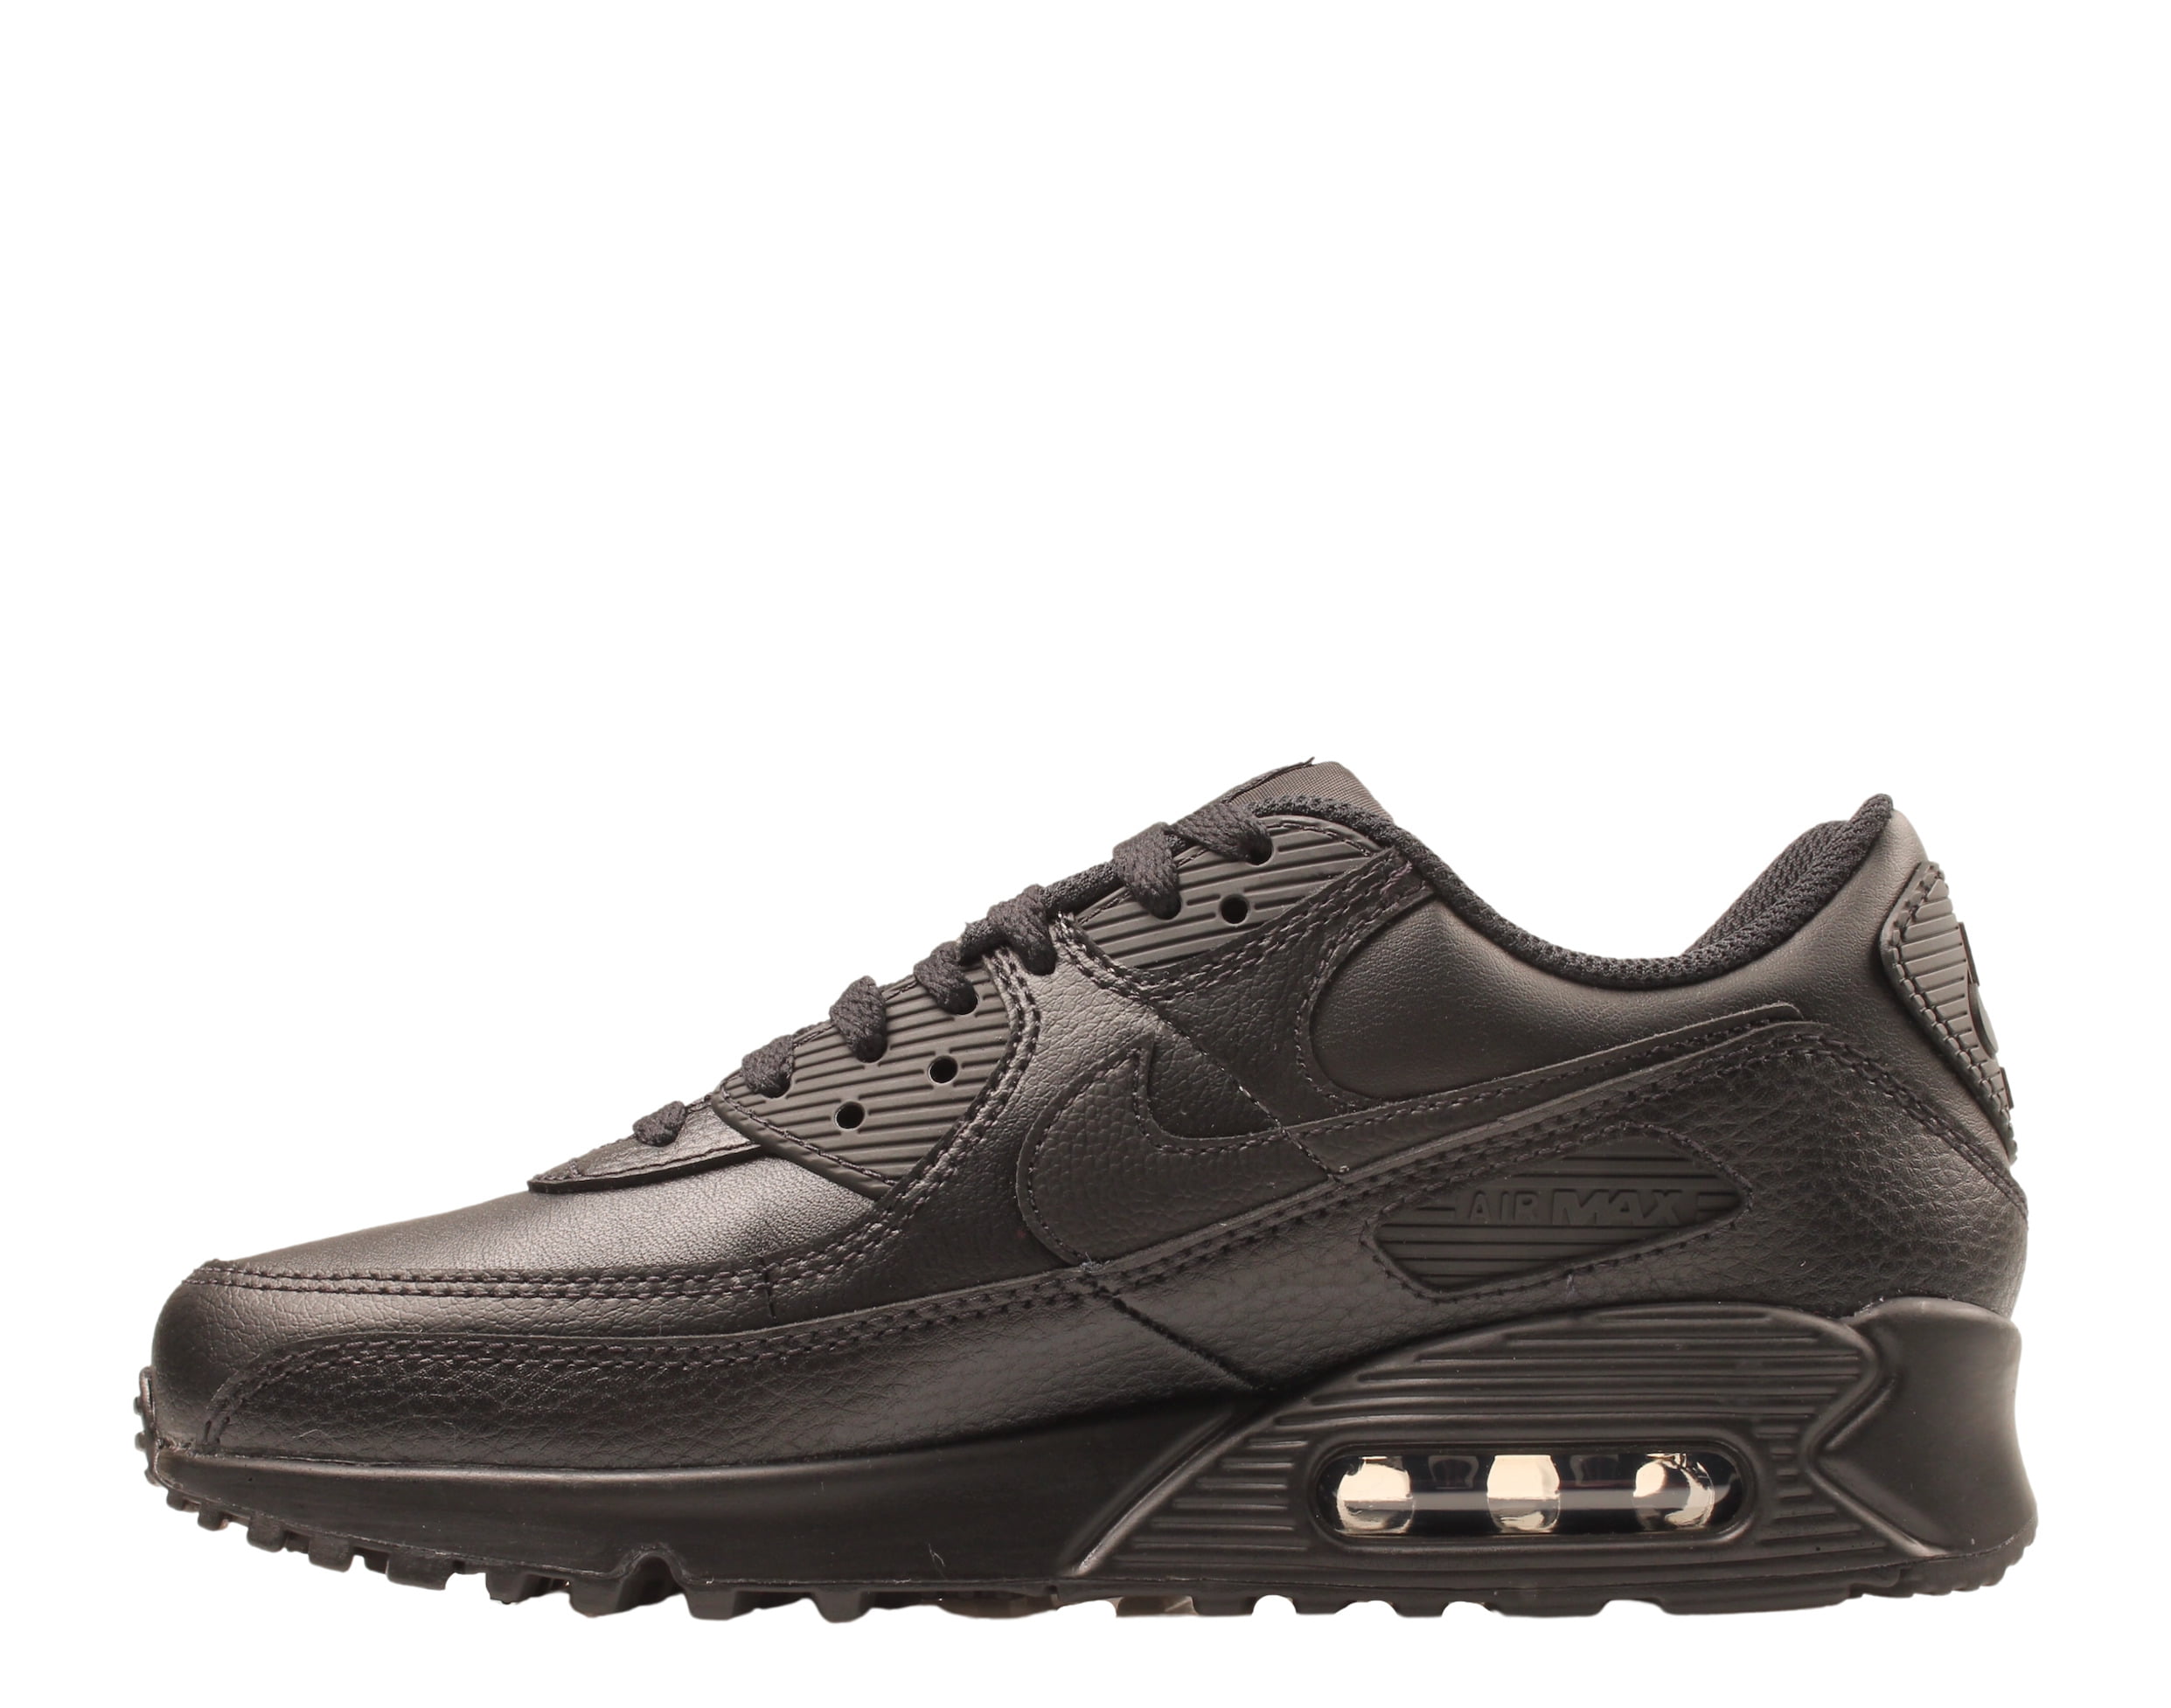 Denk vooruit Echt Zelfrespect Nike Air Max 90 Leather Men's Running Shoes Size 8 - Walmart.com